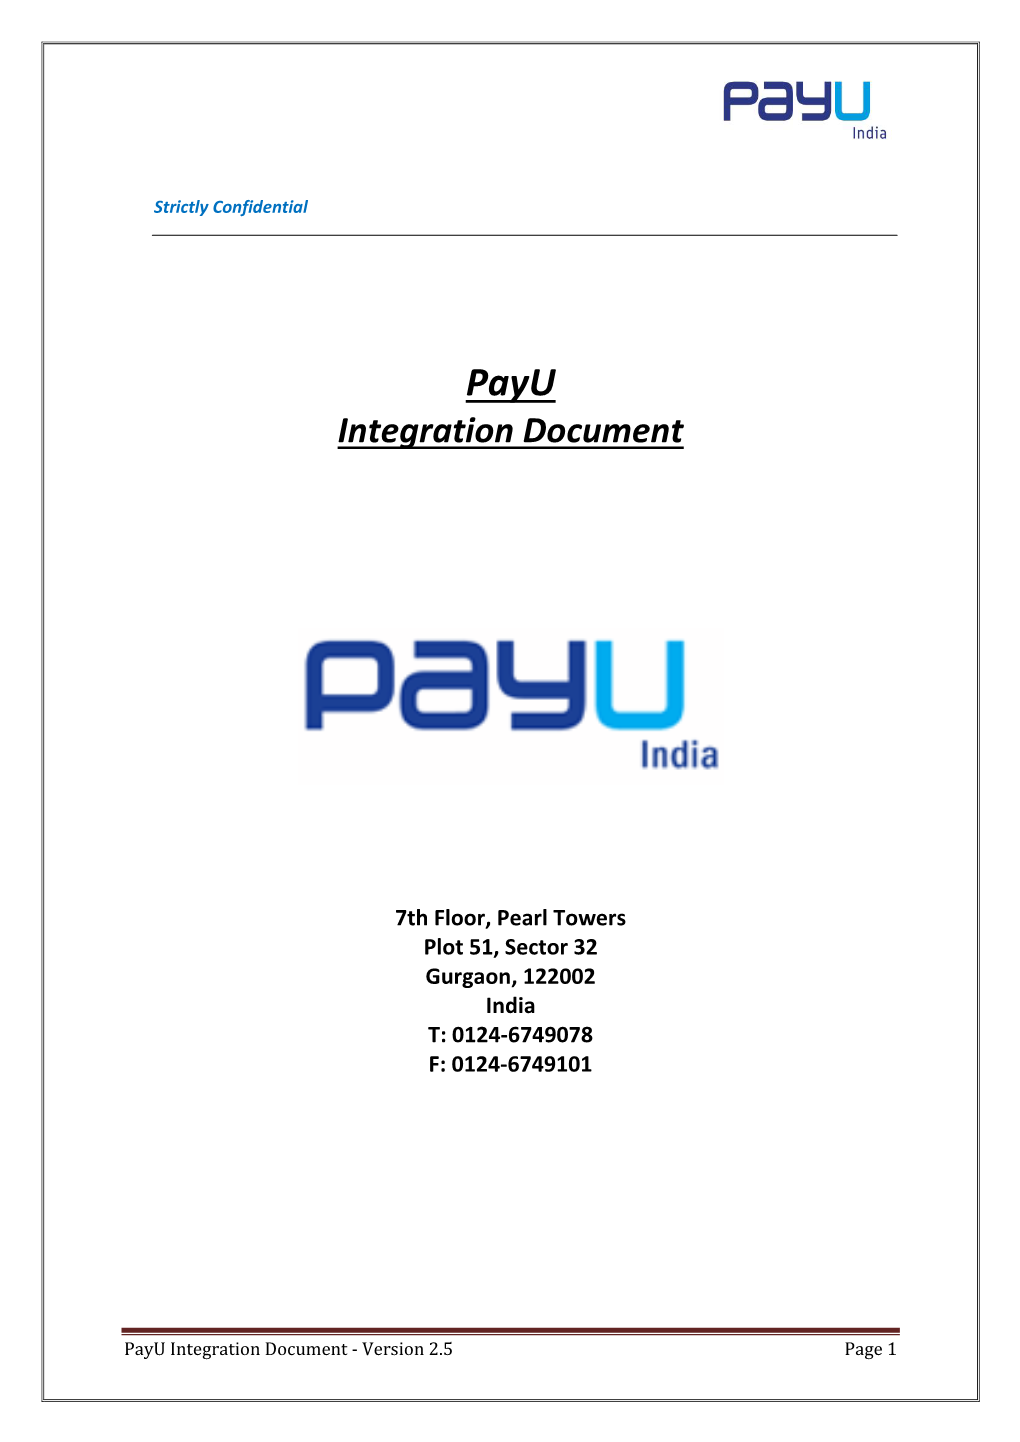 Payu Integration Document